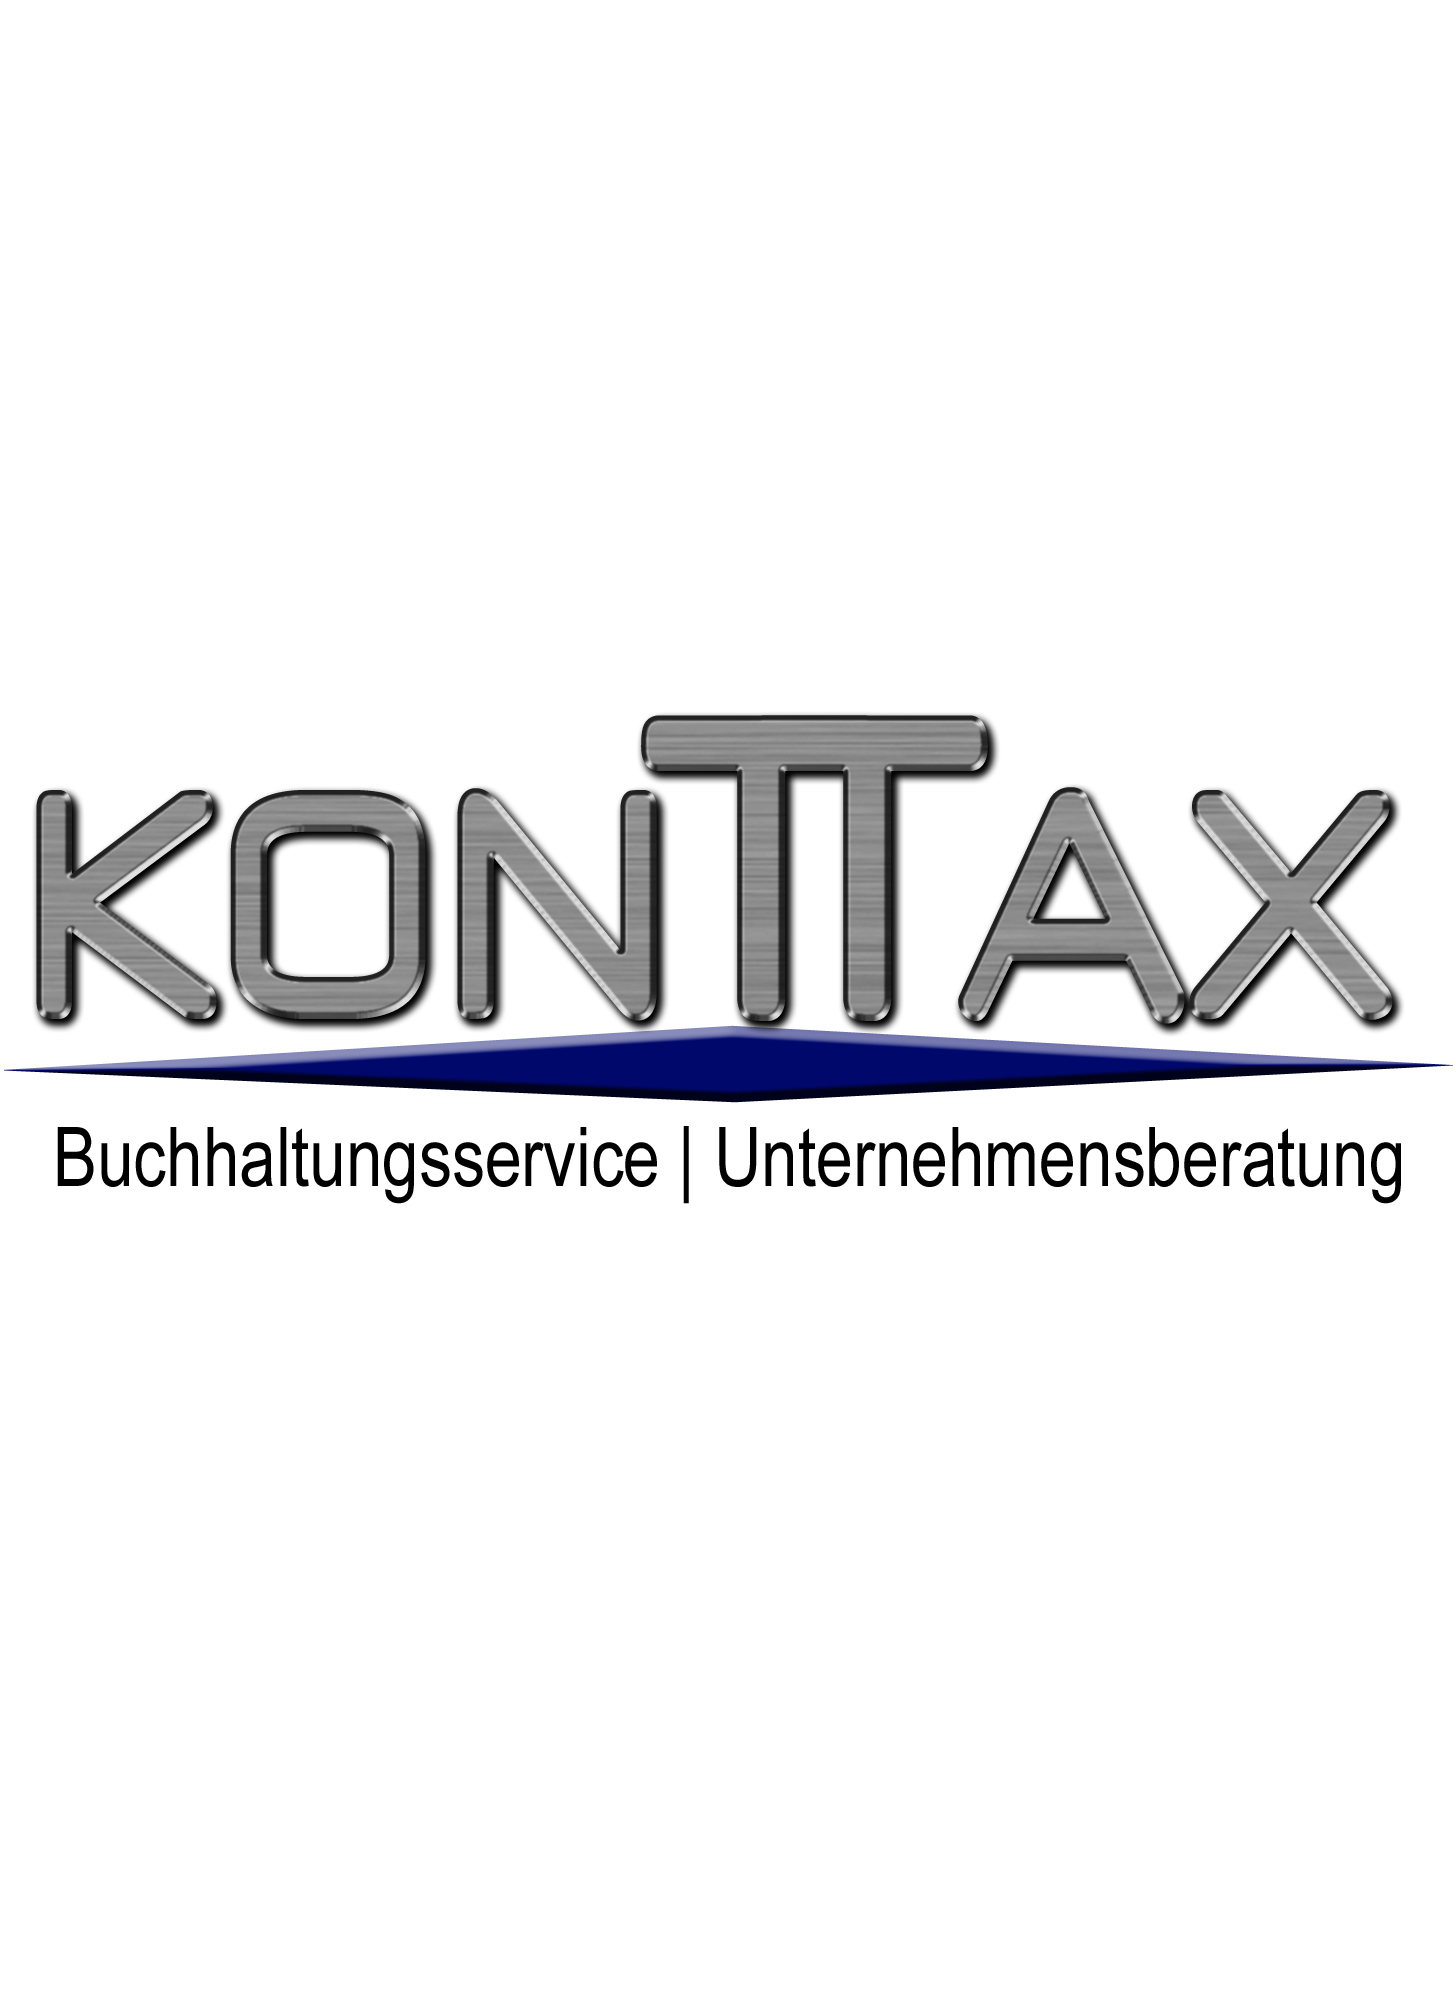  Konttax - Buchhalterin in Berlin